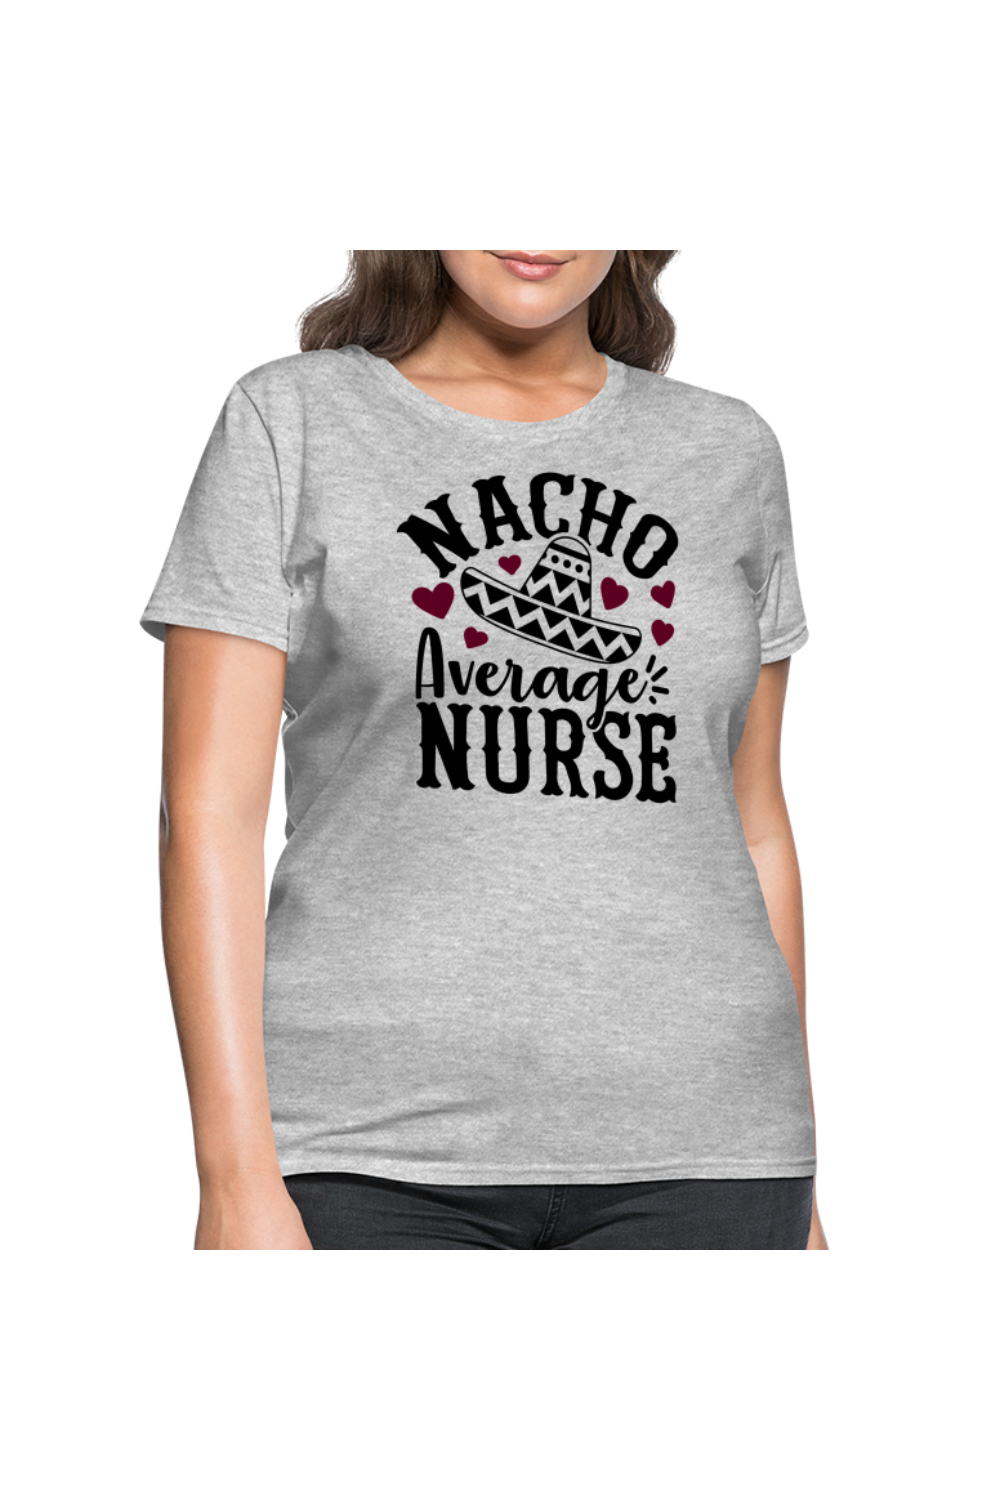 Nacho Average Nurse Women's Nurse T-Shirt - heather gray